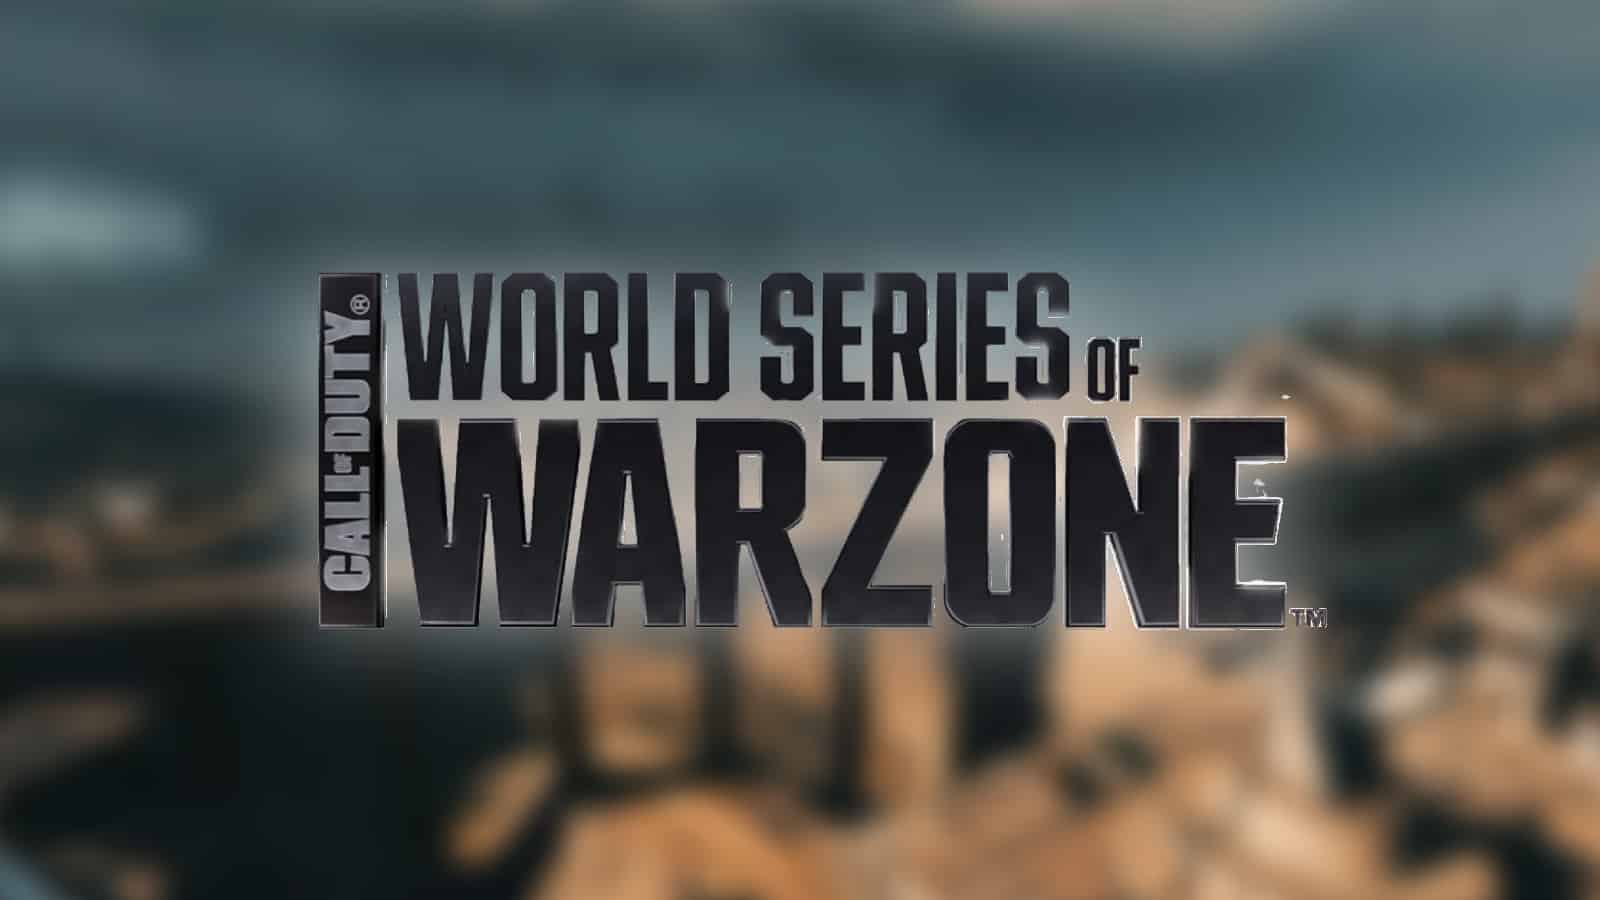 World series of warzone logo with Verdansk background